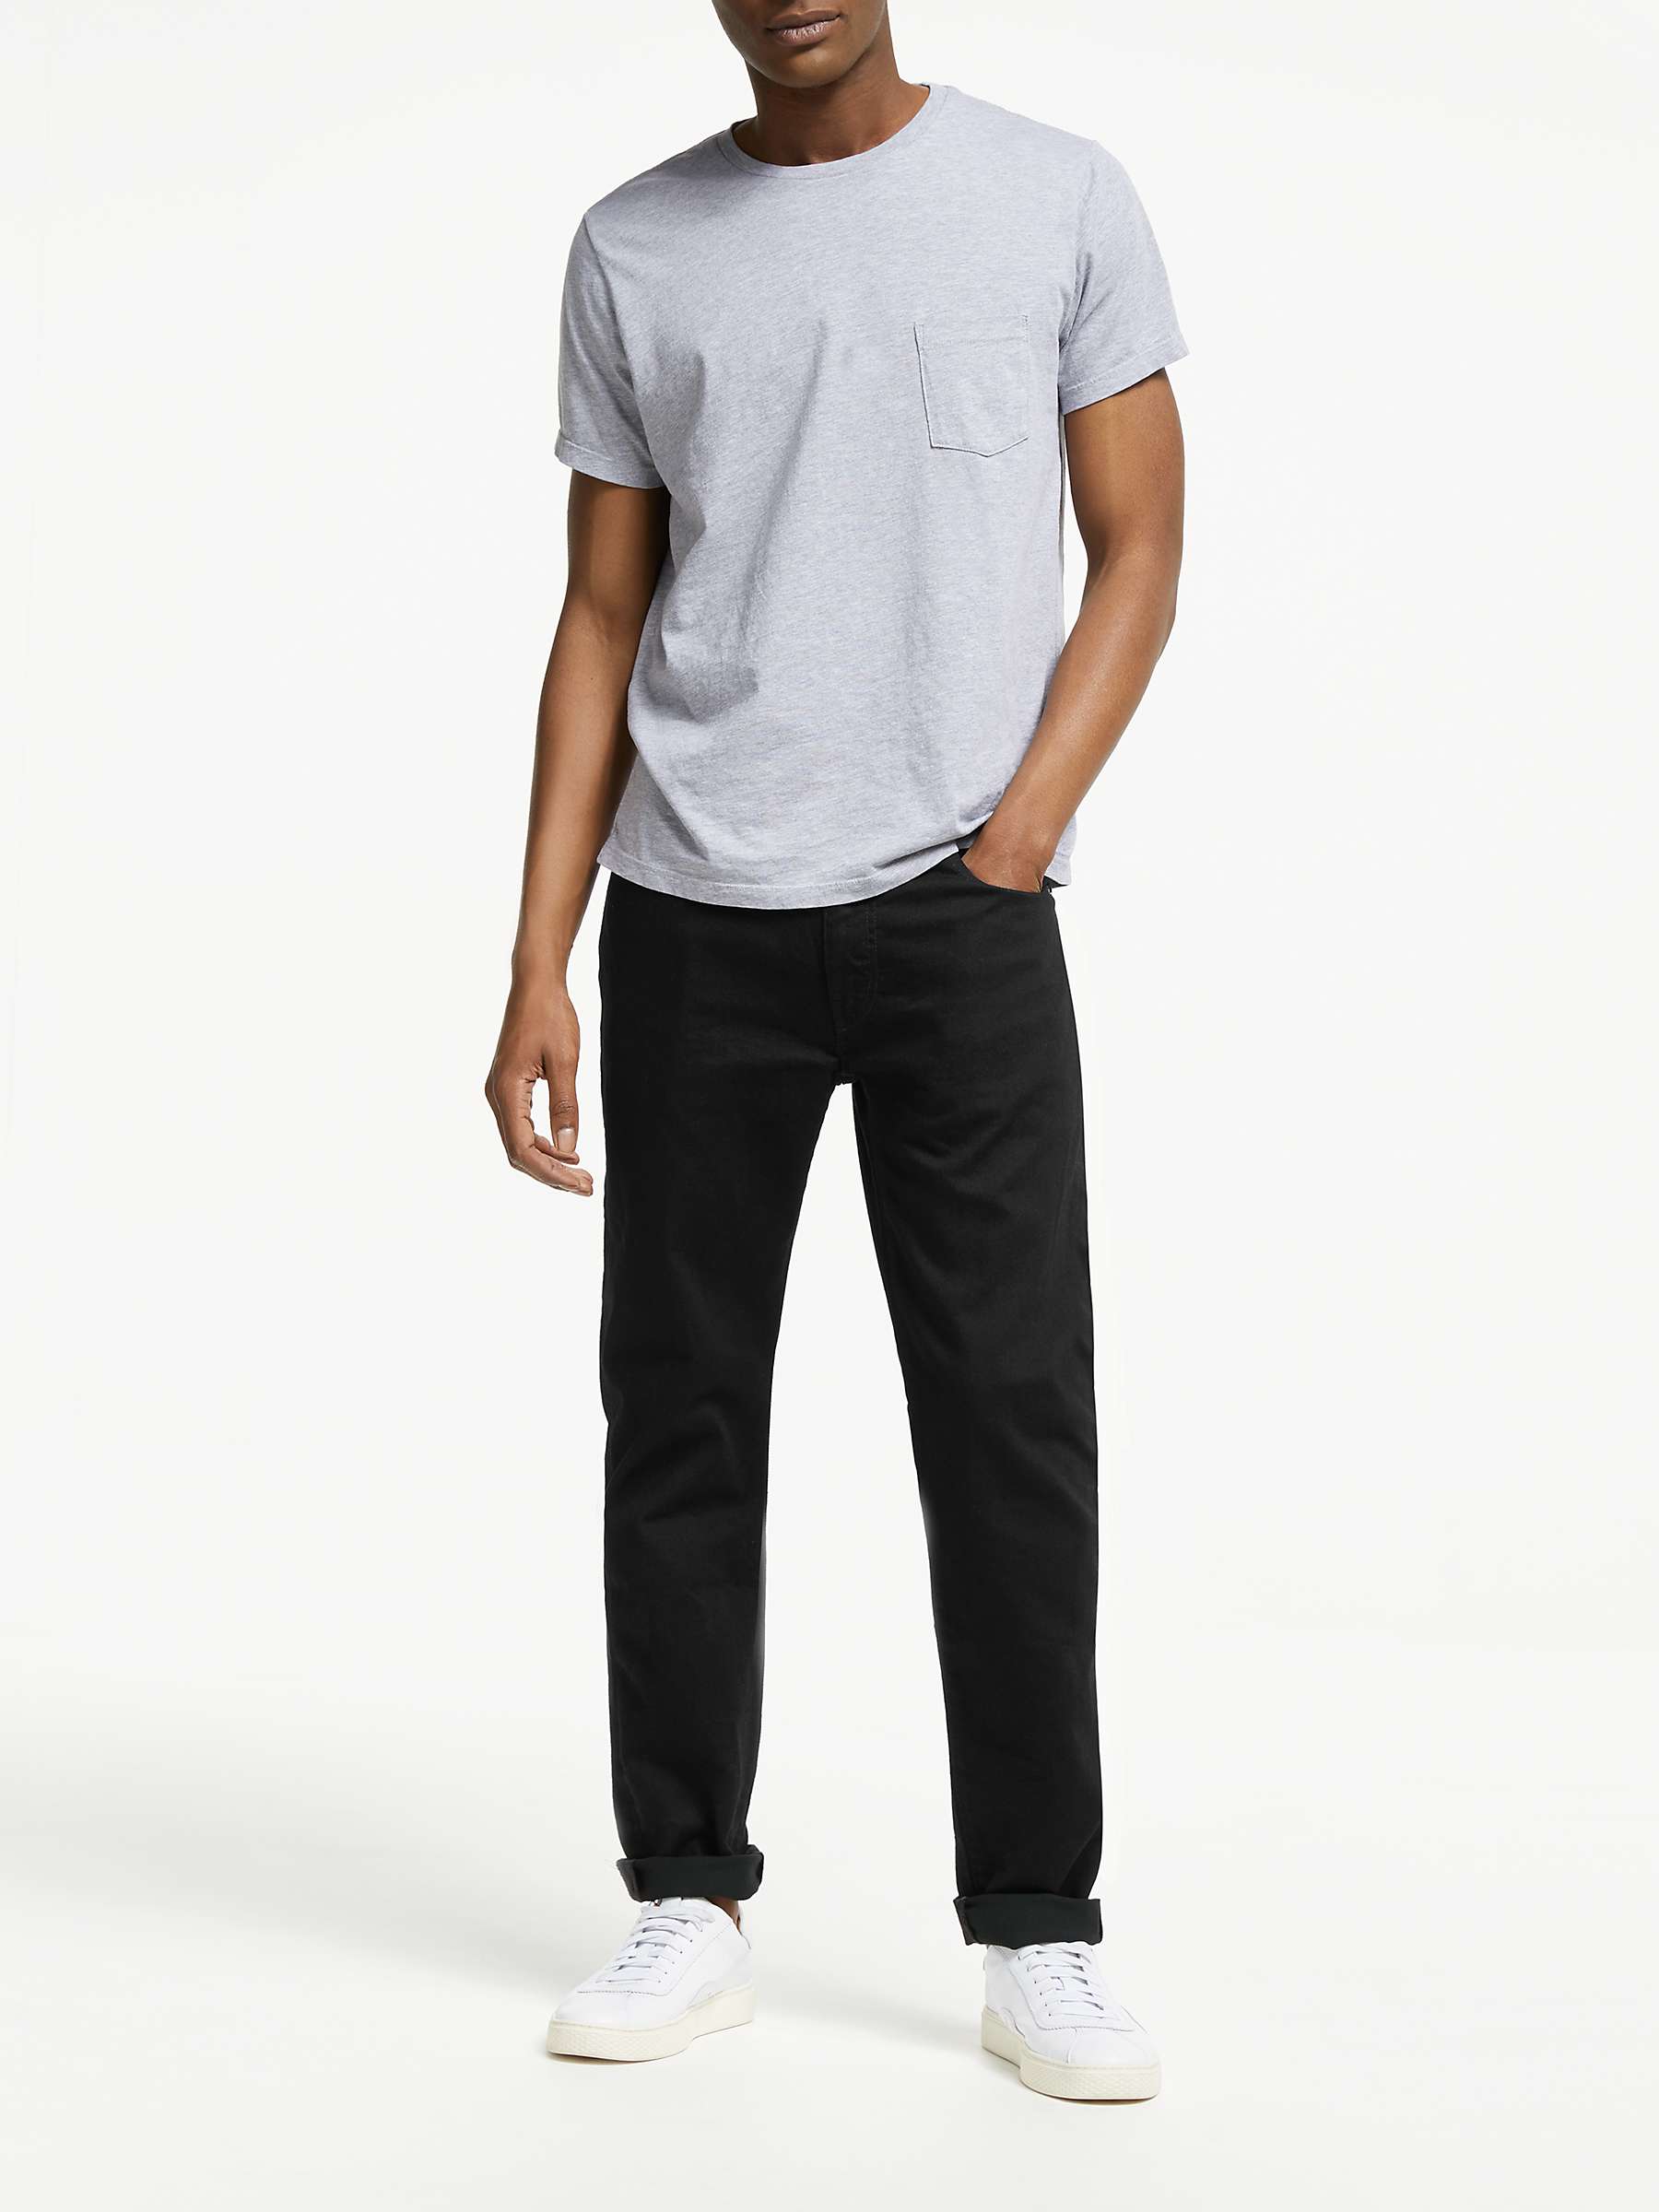 Buy Levi's 512 Slim Tapered Jeans Online at johnlewis.com